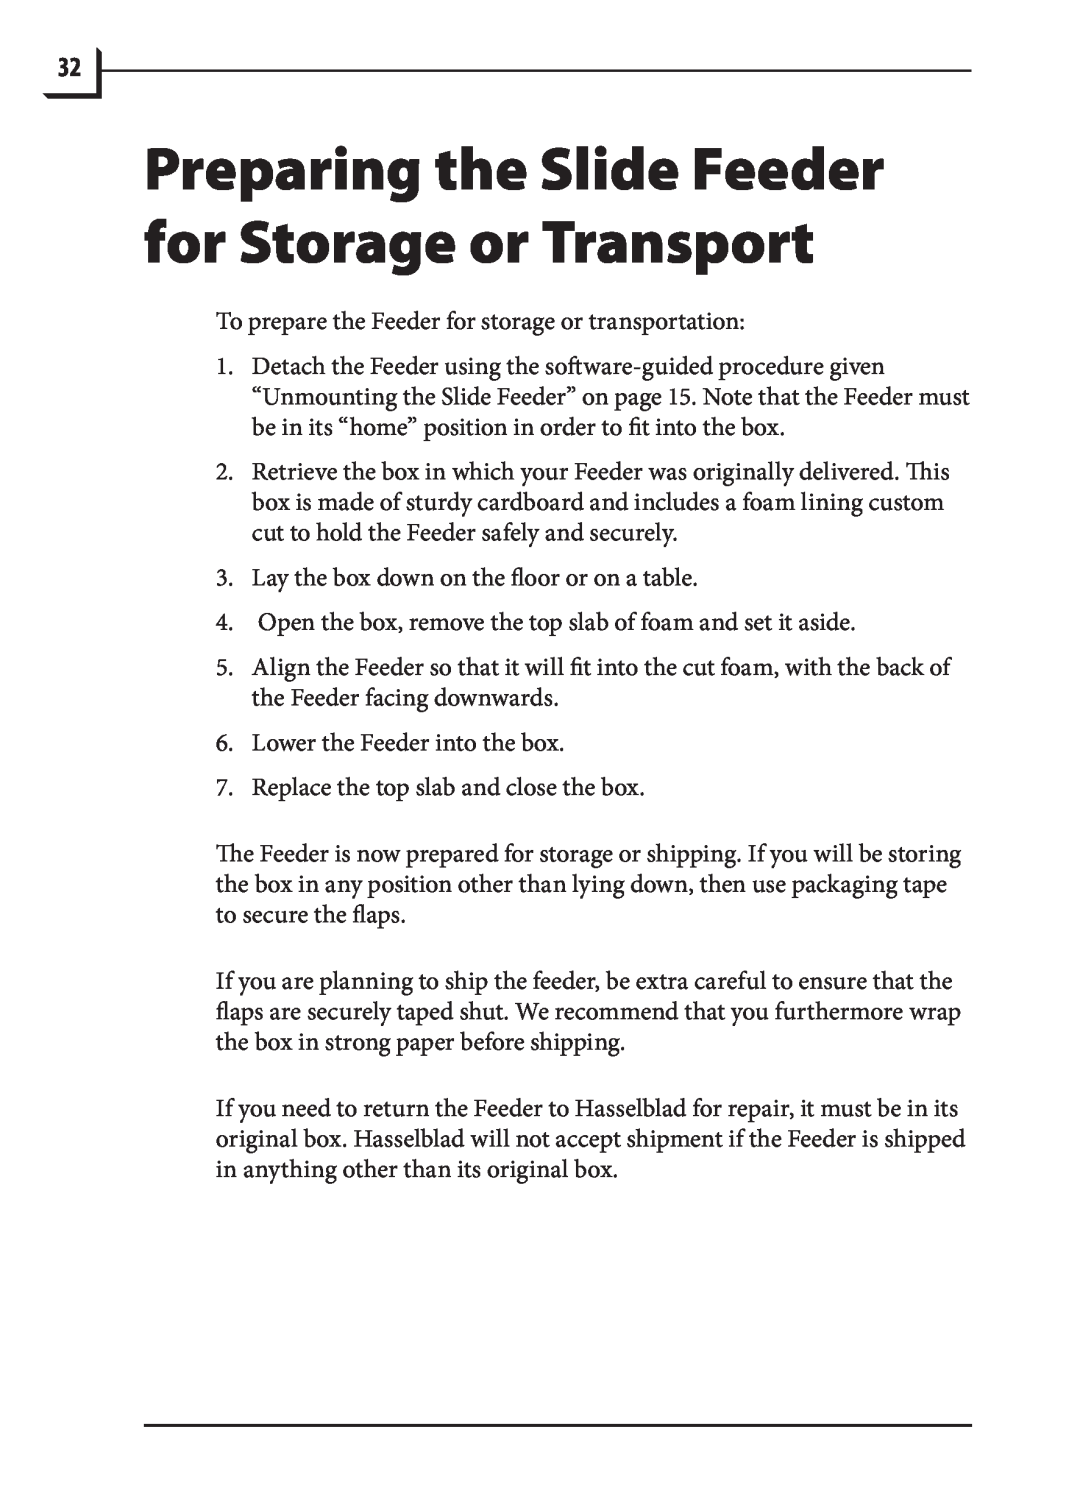 Hasselblad 949 manual Preparing the Slide Feeder for Storage or Transport 